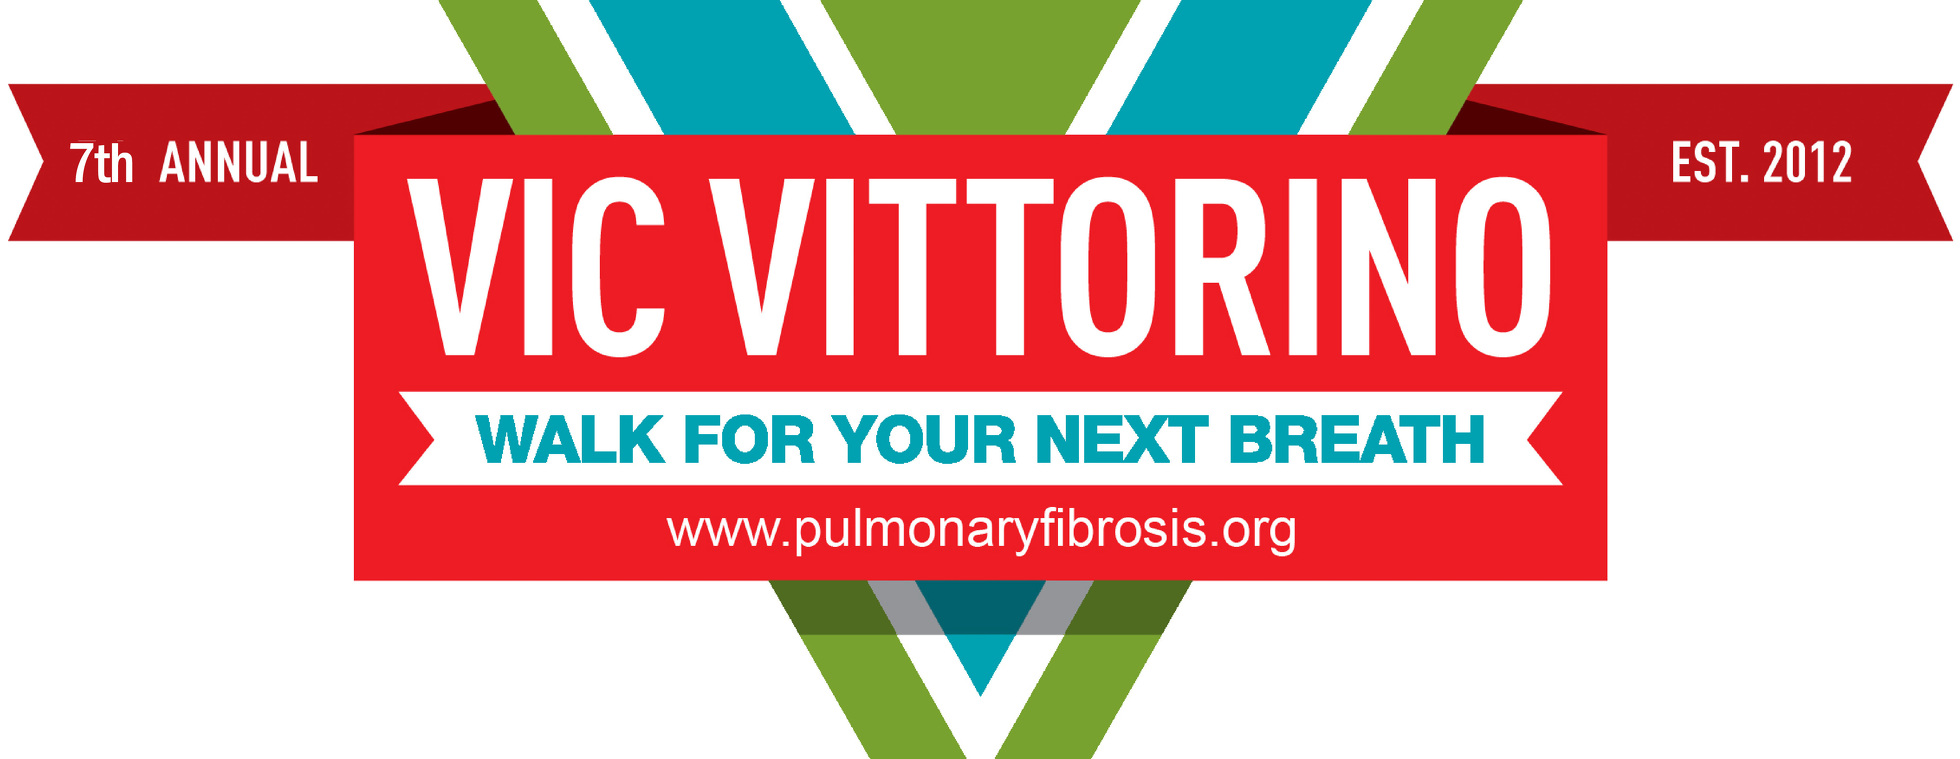 7th Annual Vic Vittorino Walk for Your Next Breath 